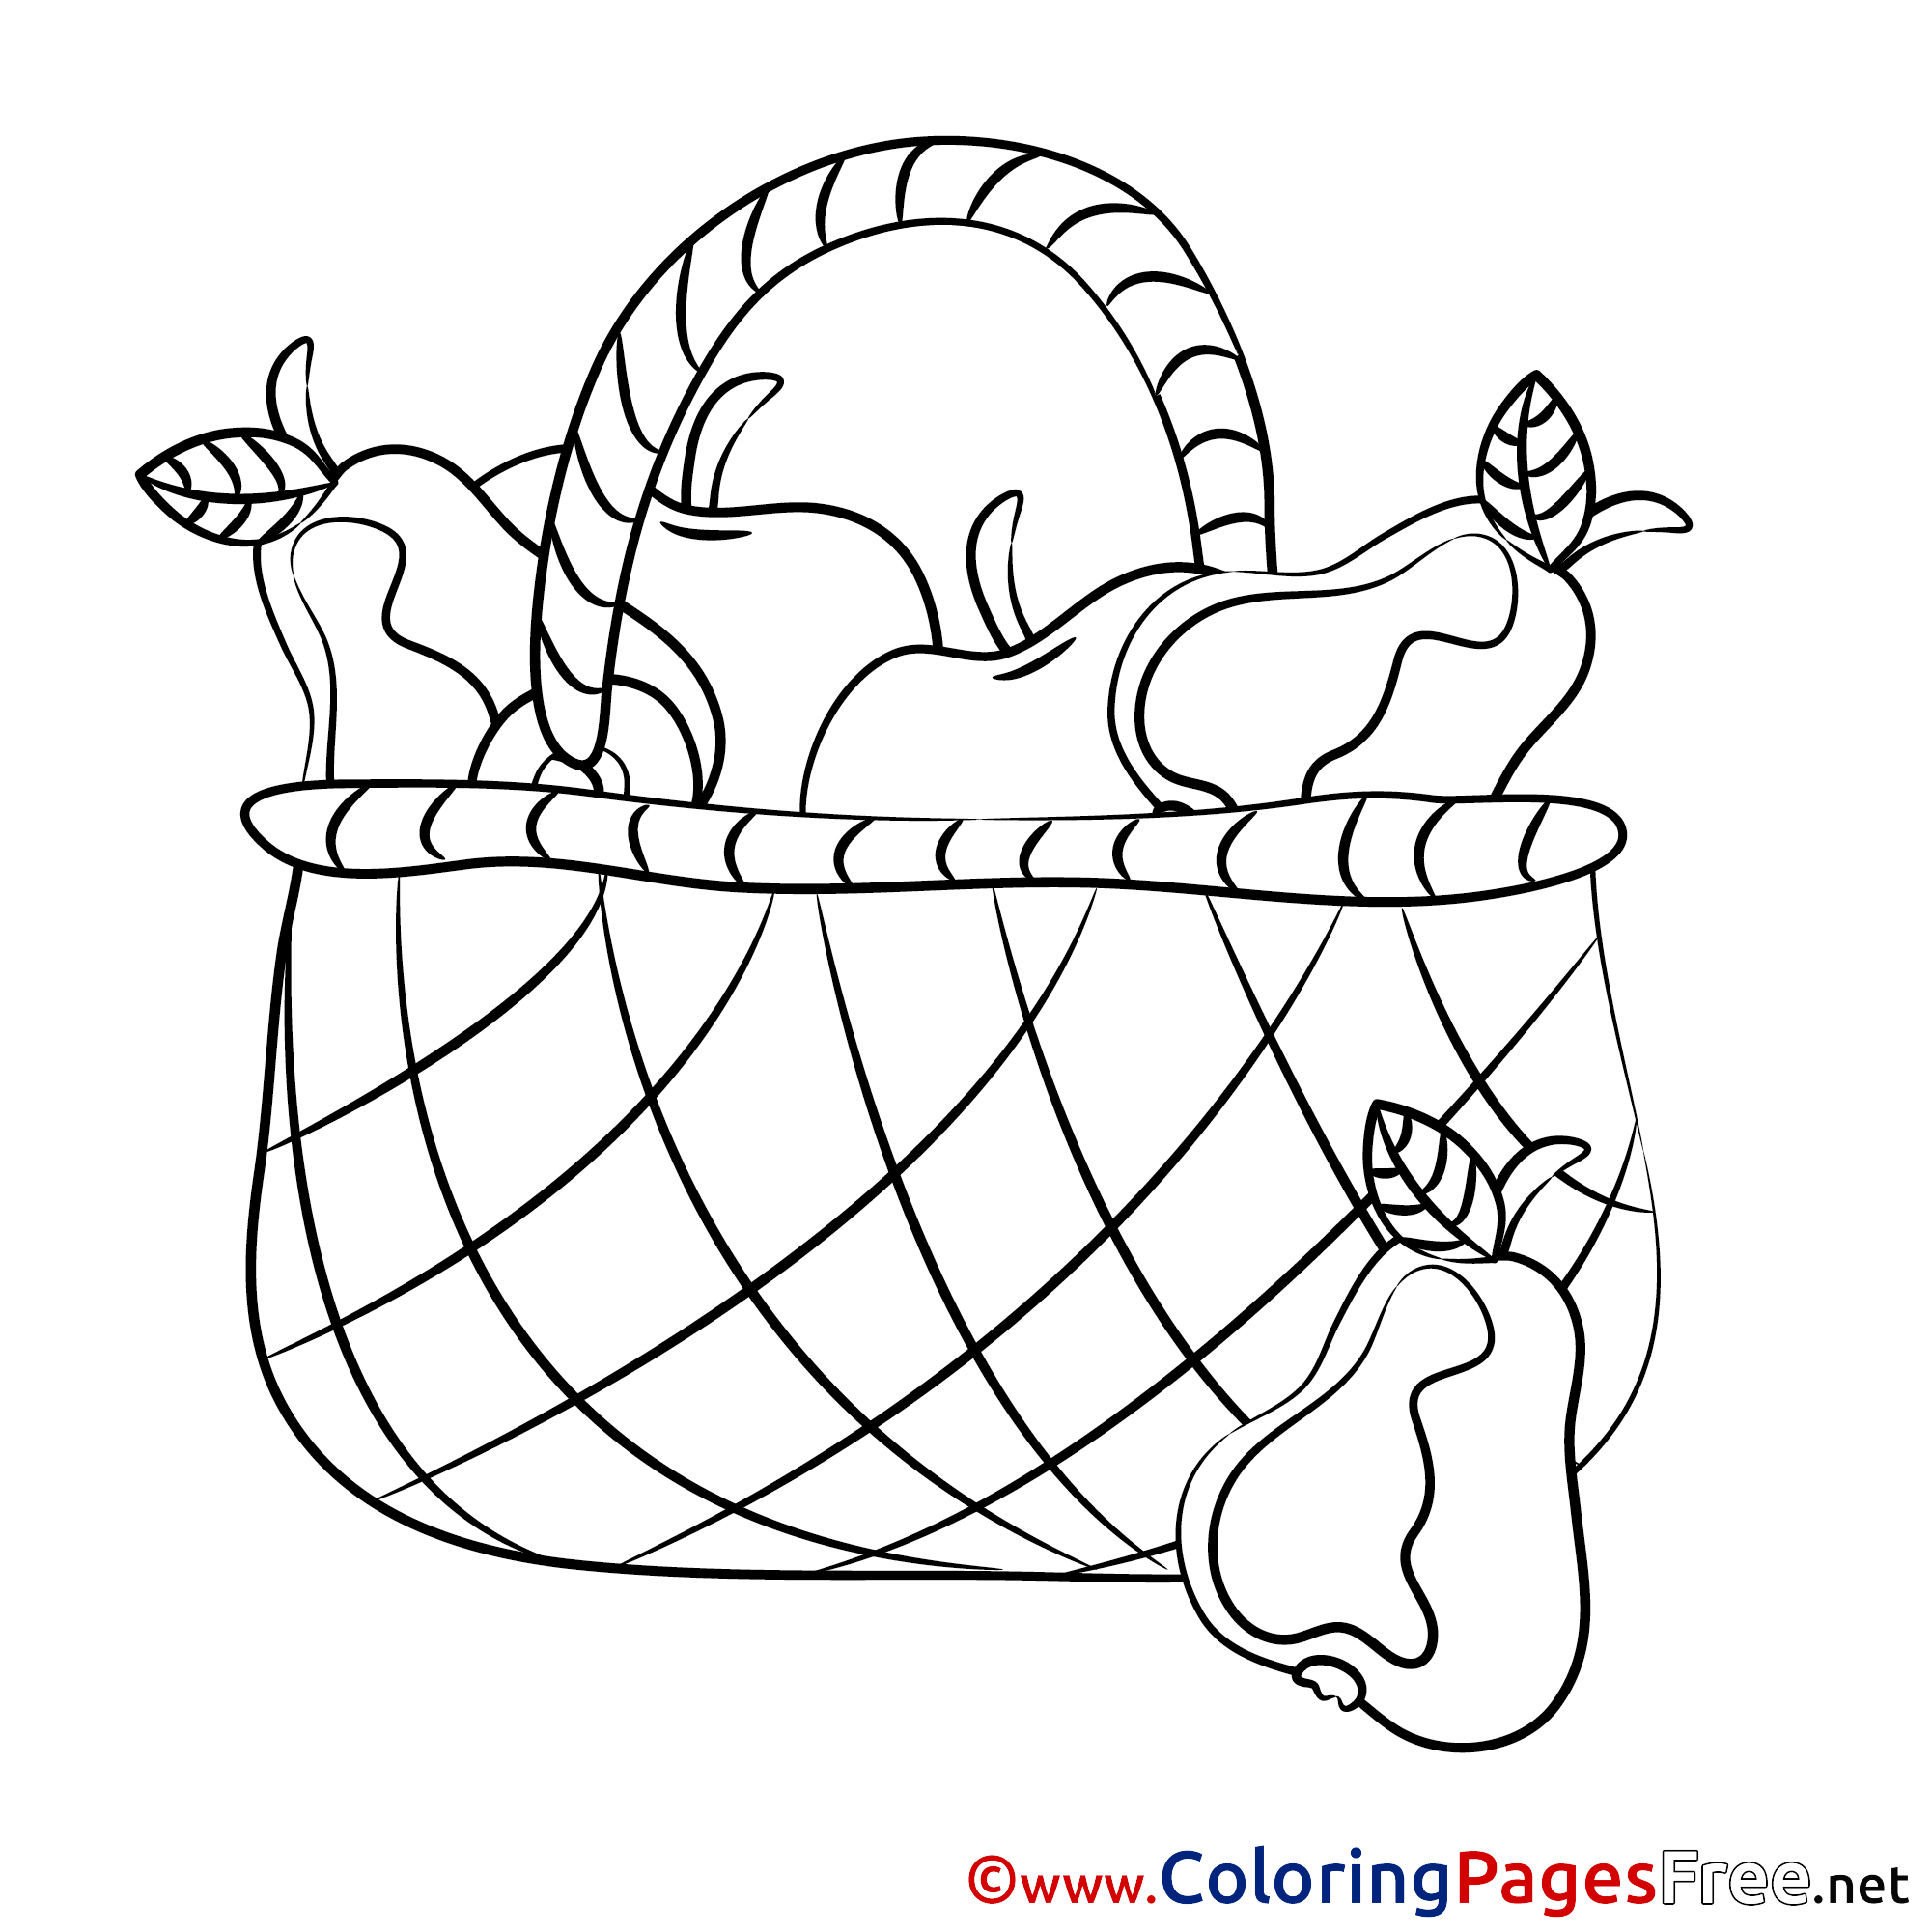 Download Basket Fruits Coloring Sheets download free